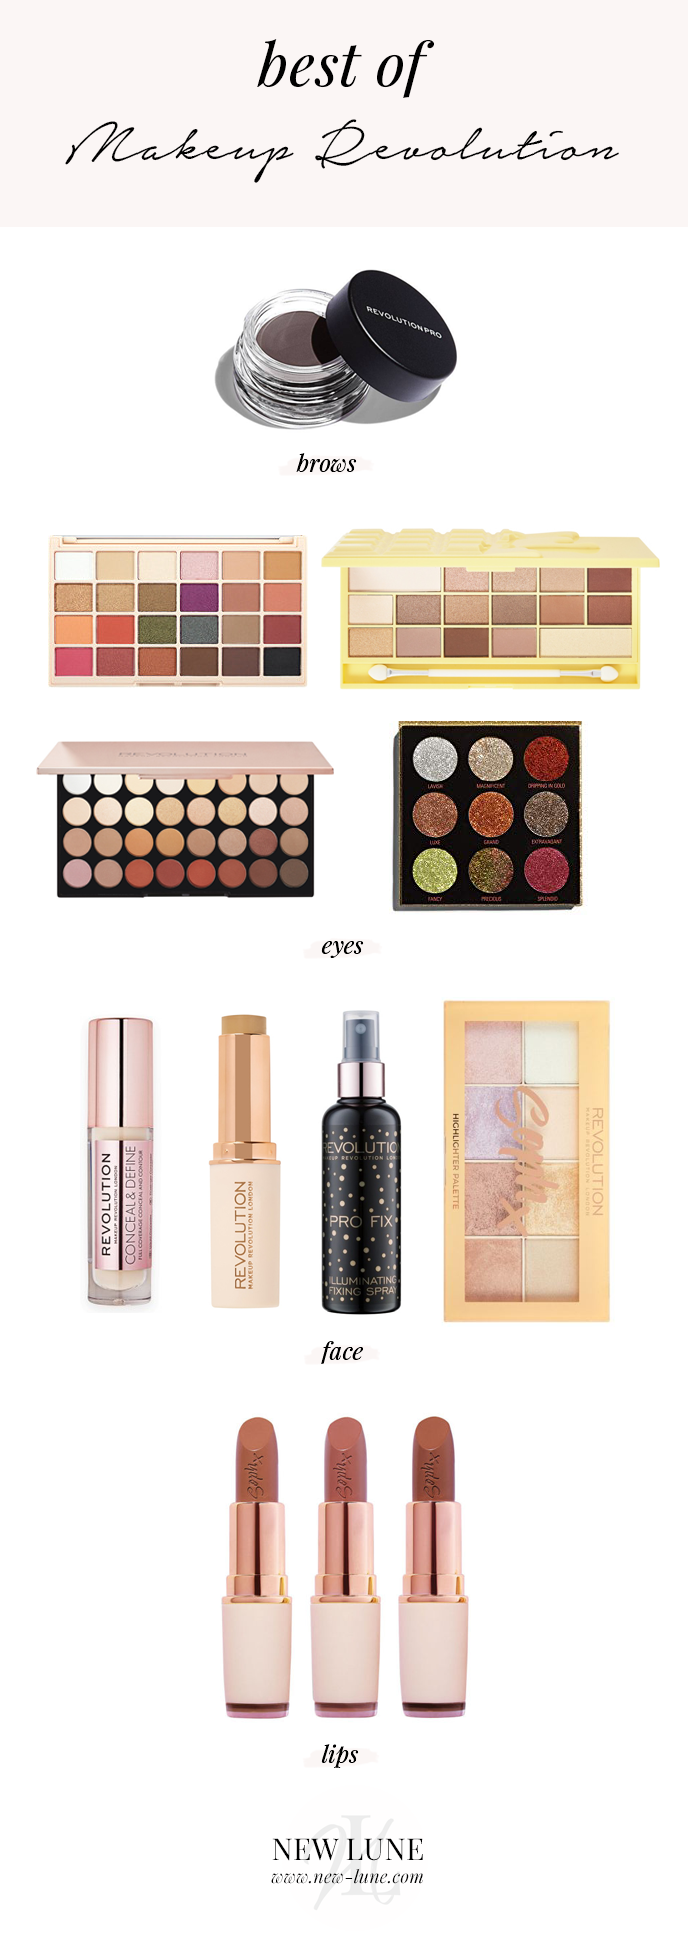 best of makeup revolution products - new lune - eyeshadow palettes - soph - lipsticks - glitters - concealer - foundation stick